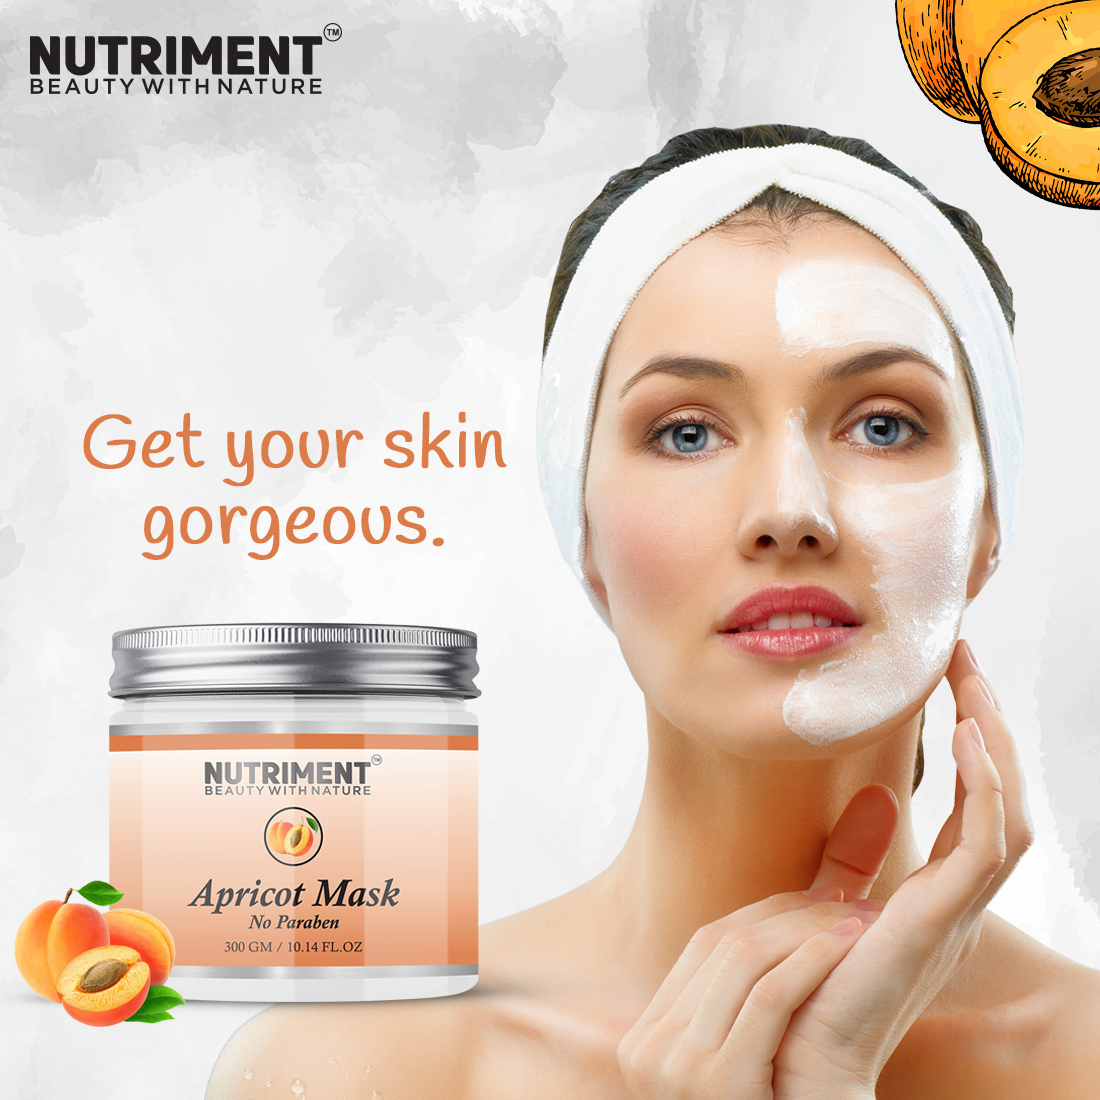 Nutriment Apricot Mask  - 300gram